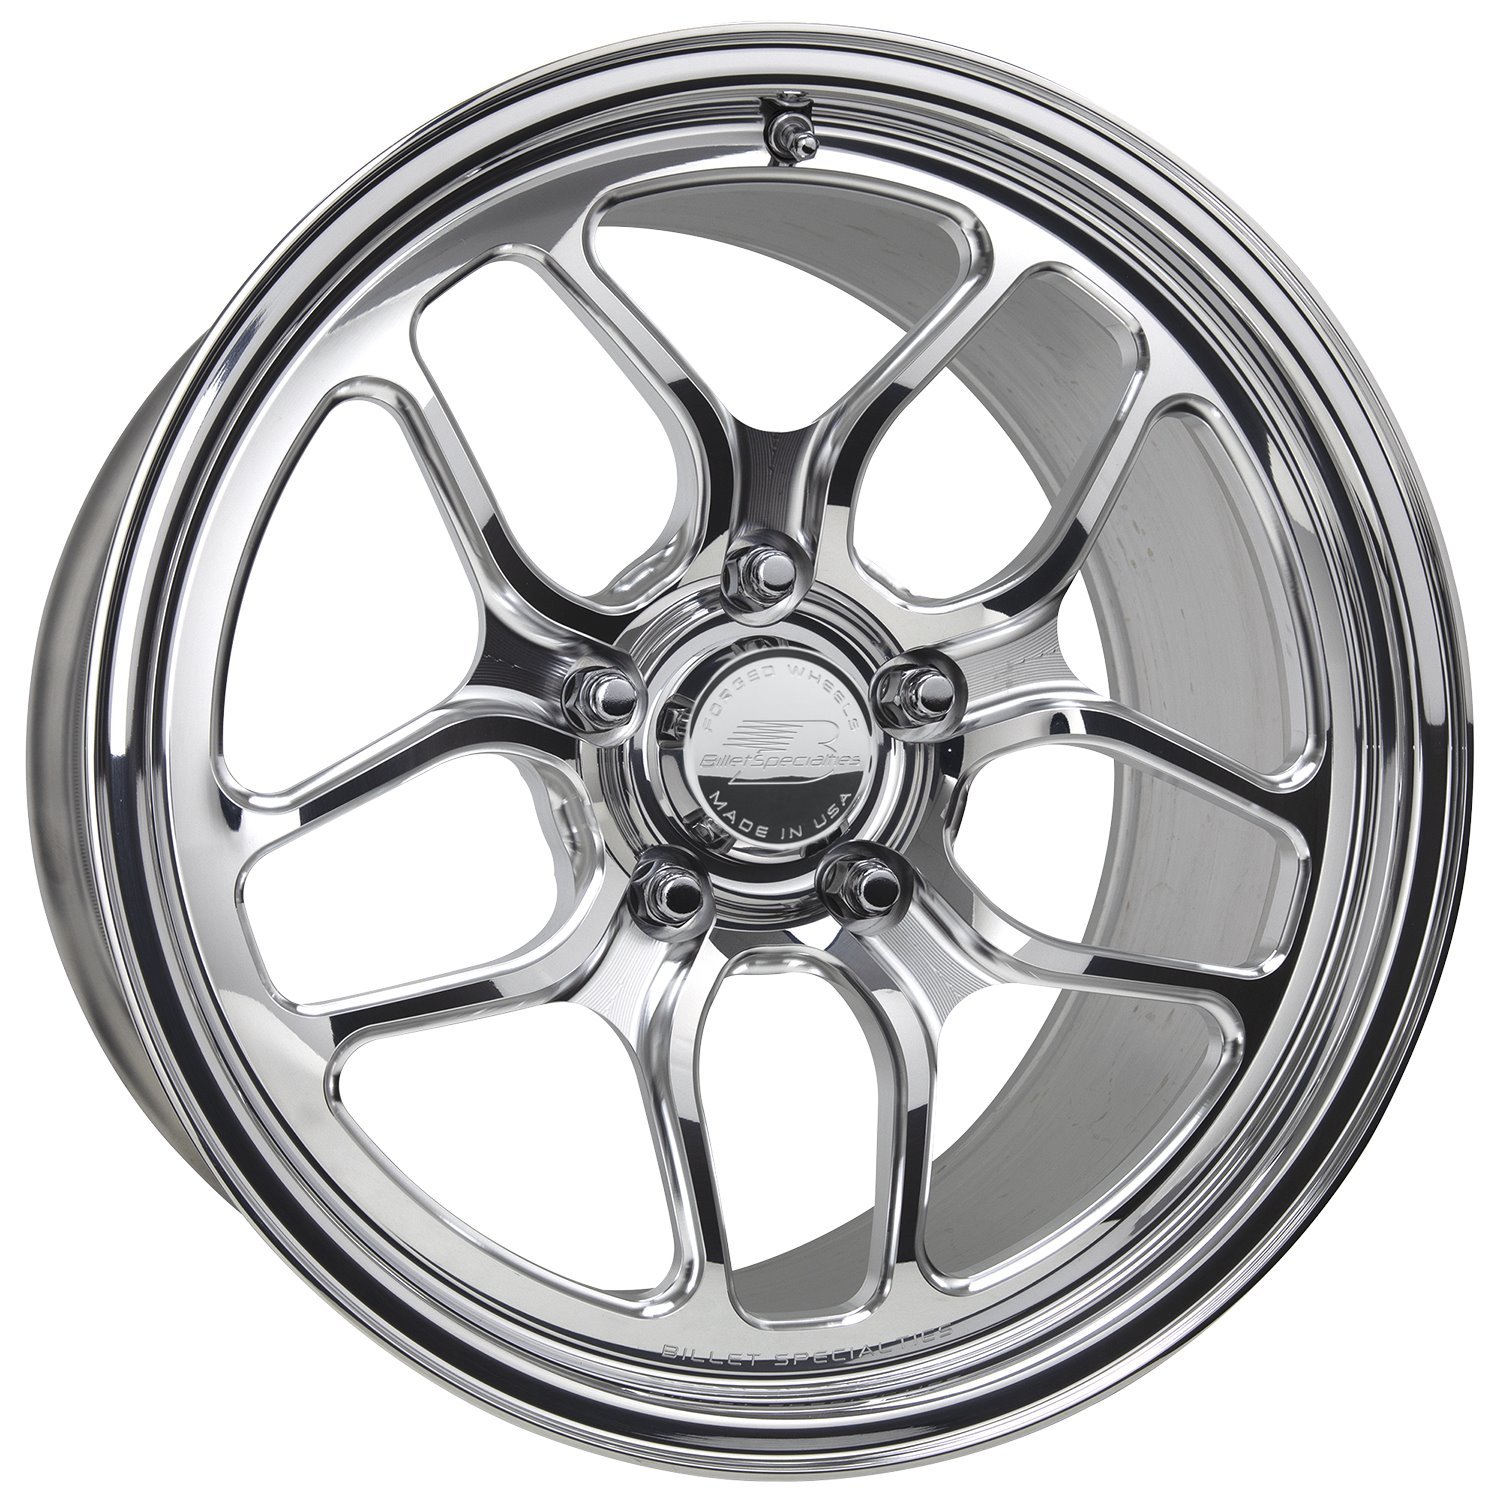 RSB23515L6575 Single-Beadlock Street Lite Wheel [Size: 15" x 15"] Finish: Polished